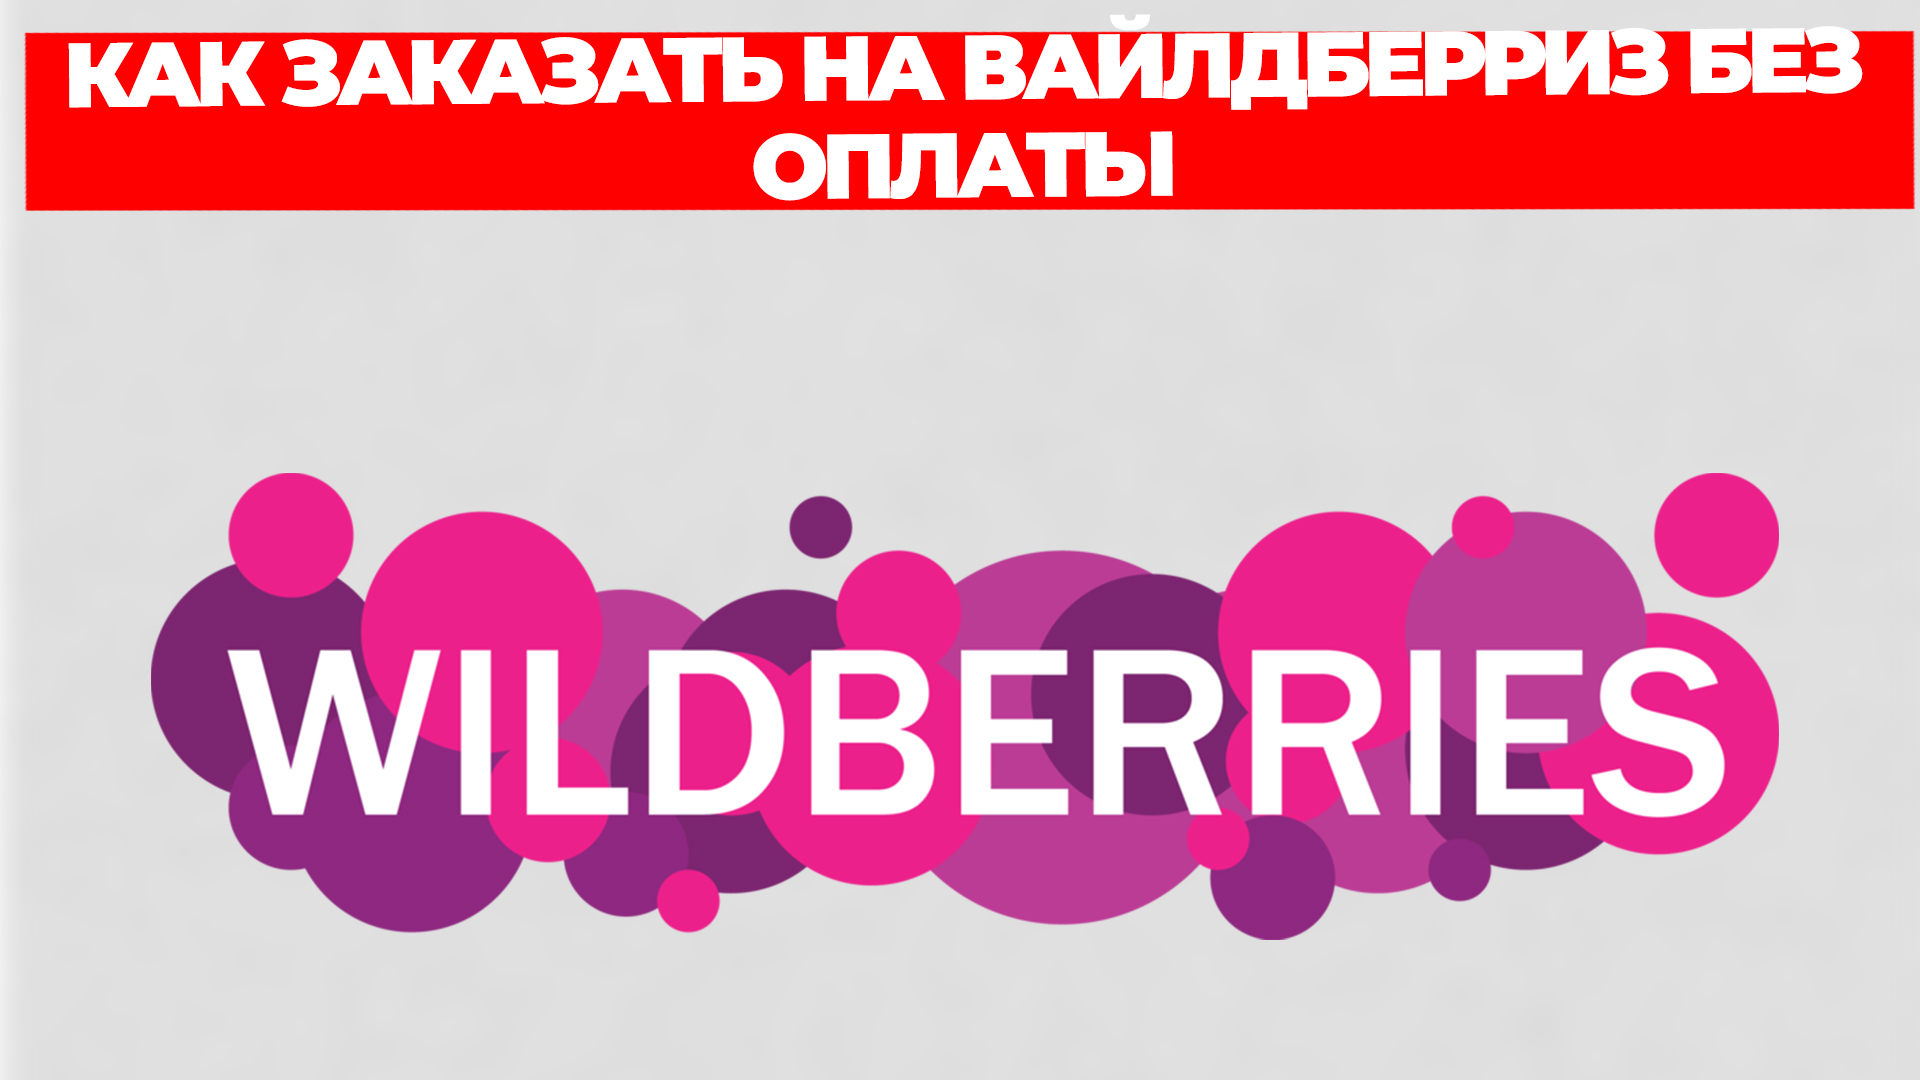 Wildberries 1 интернет магазины. Вайлдберриз. Wildberries лого. Wildberries интернет магазин. Wildberries иконка.